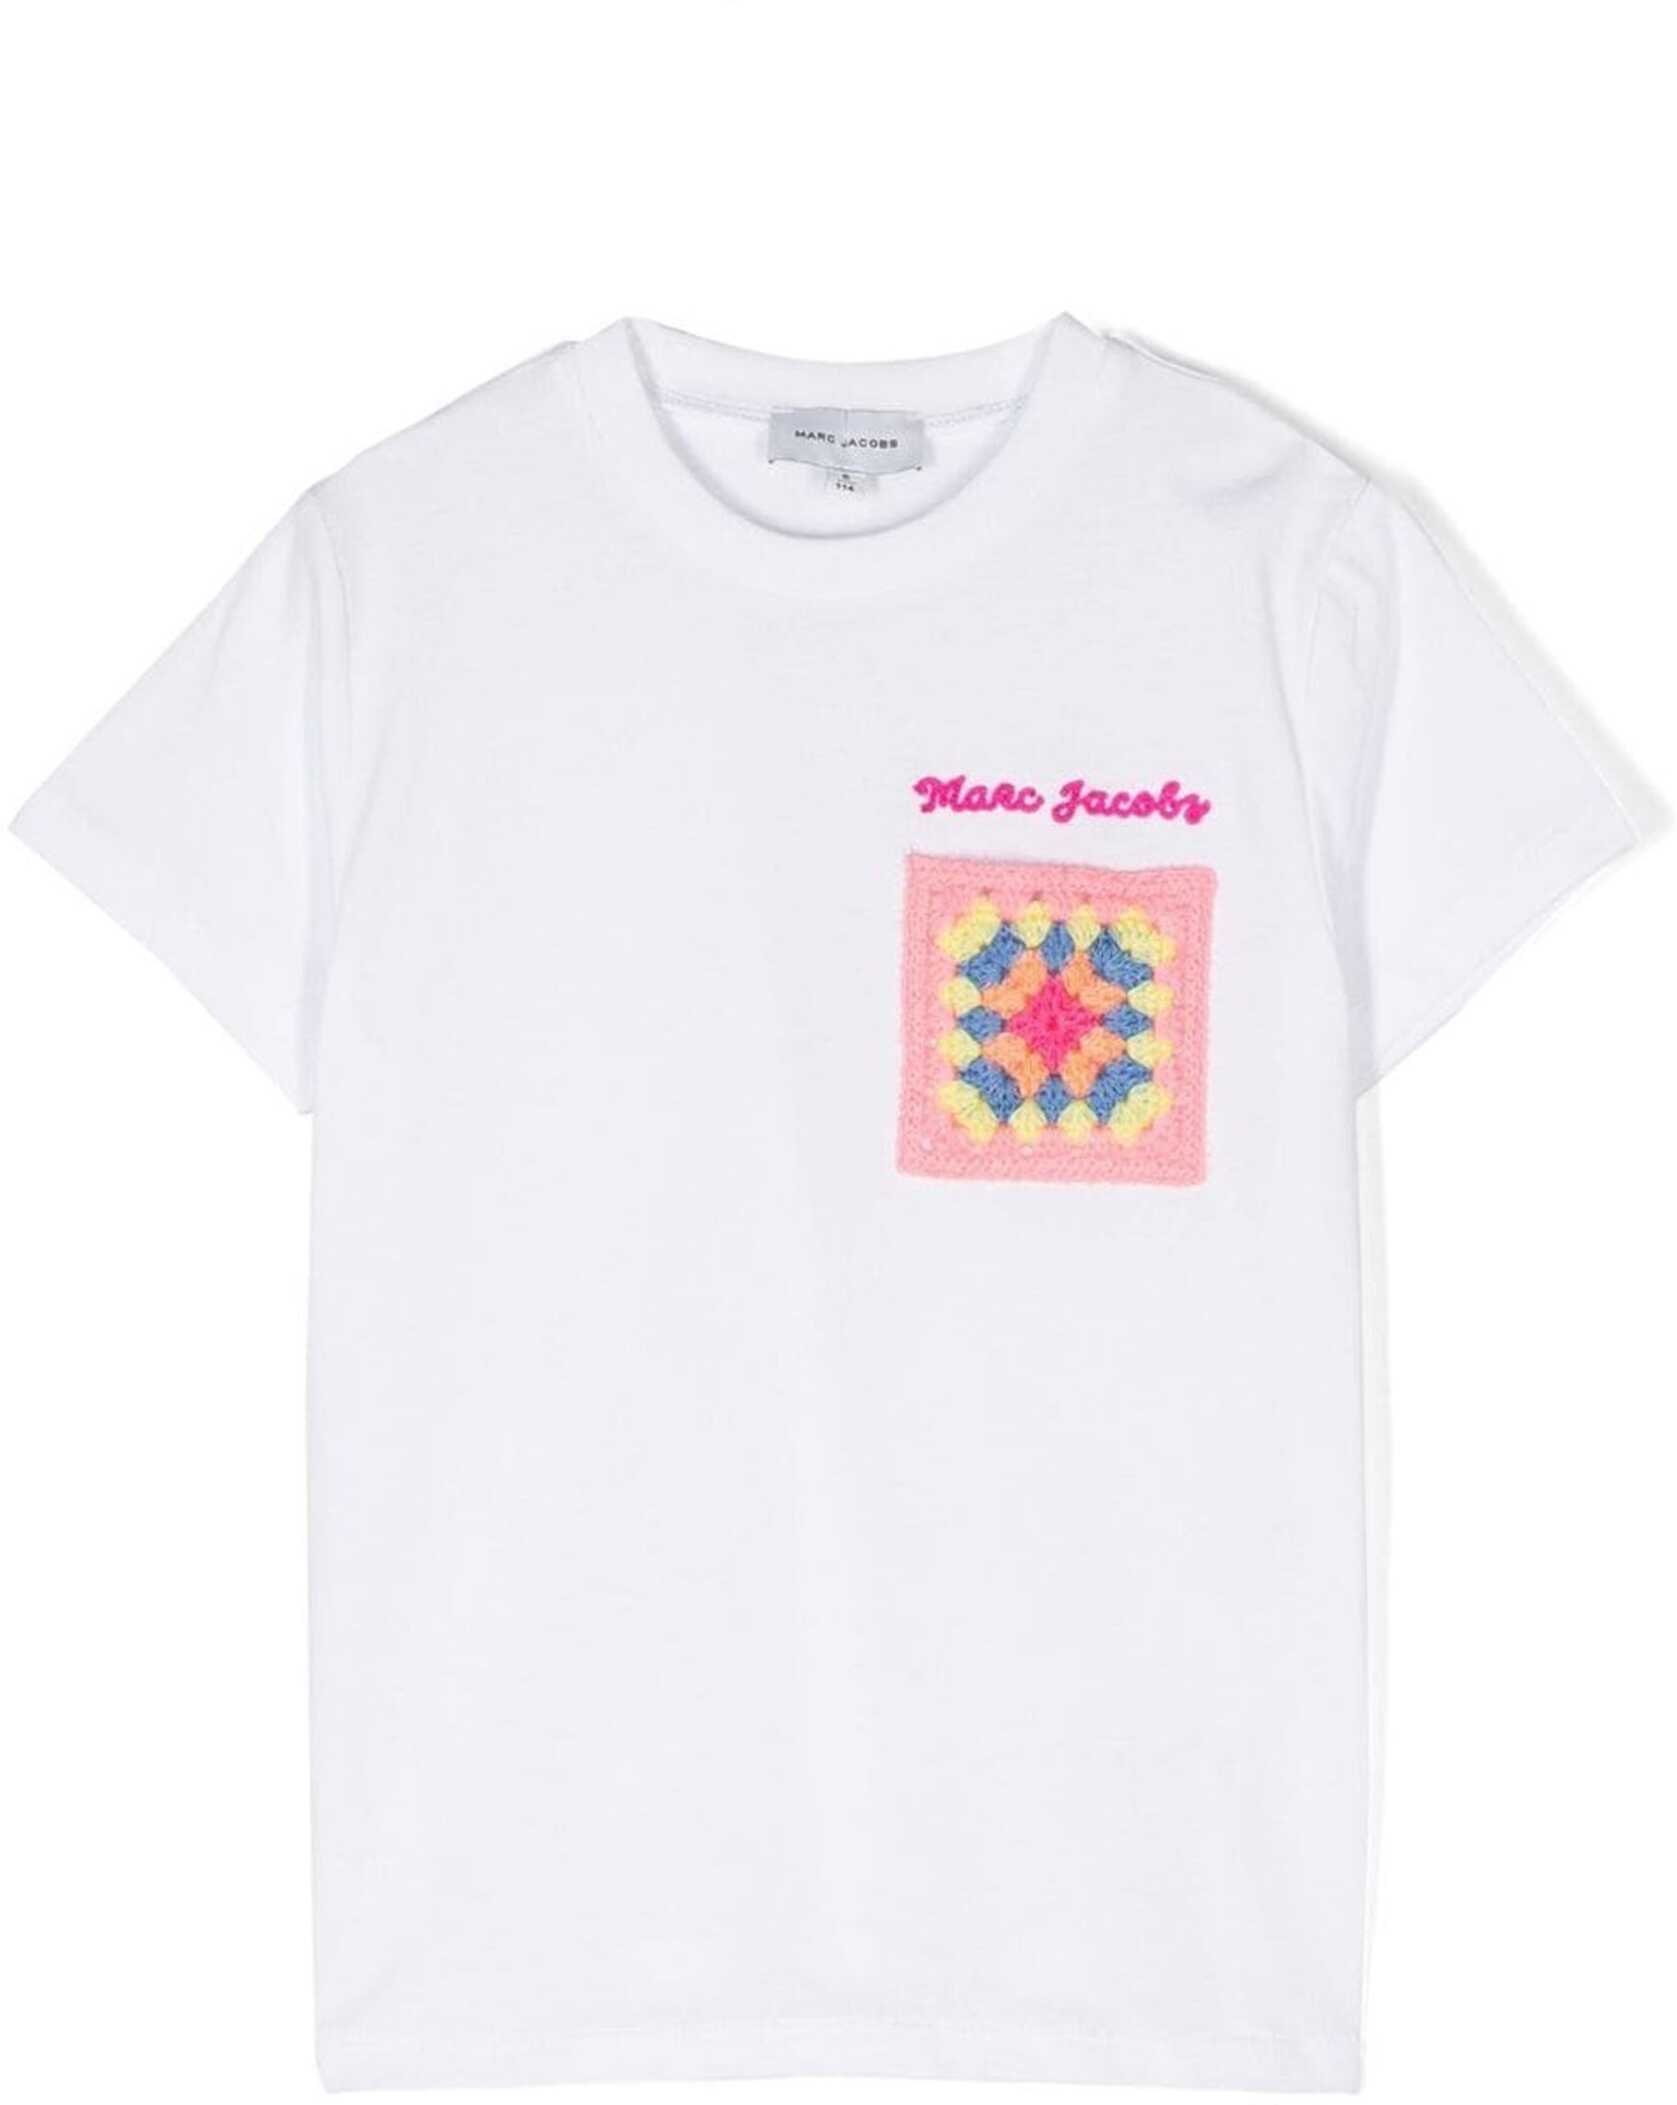 Poze Marc Jacobs Mc Pocket Crochet T-Shirt WHITE